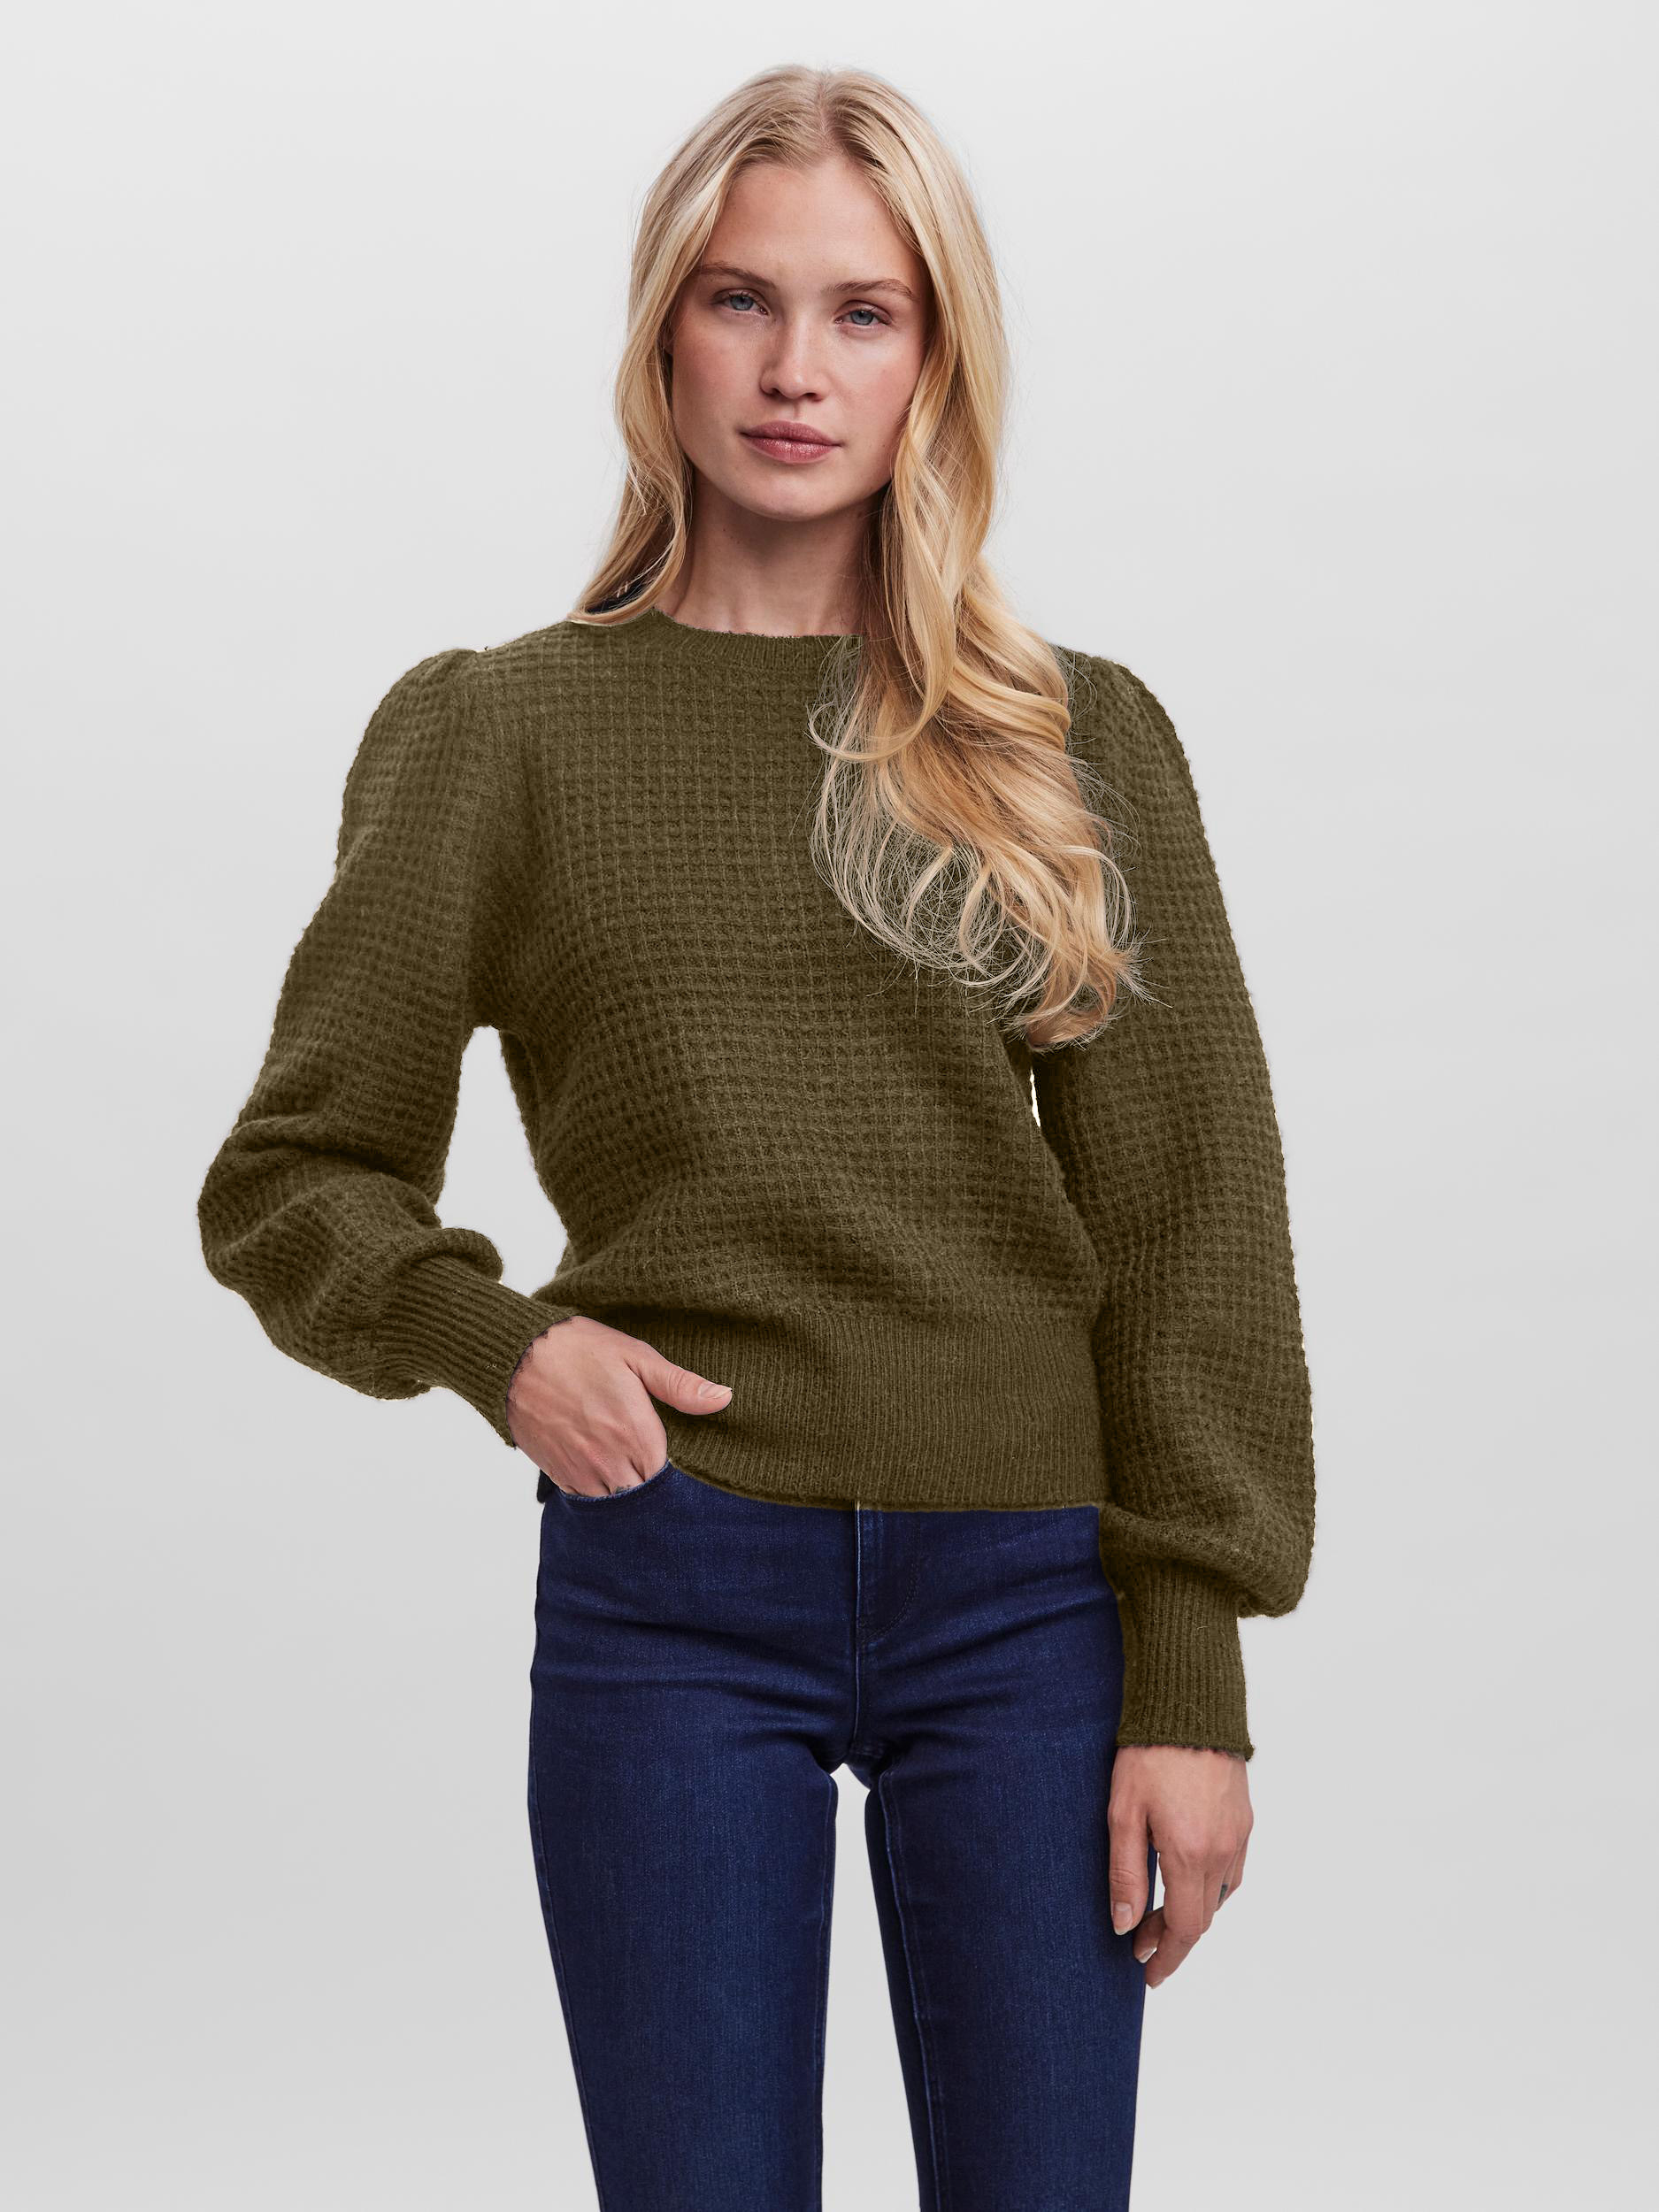 Allison textured knit sweater